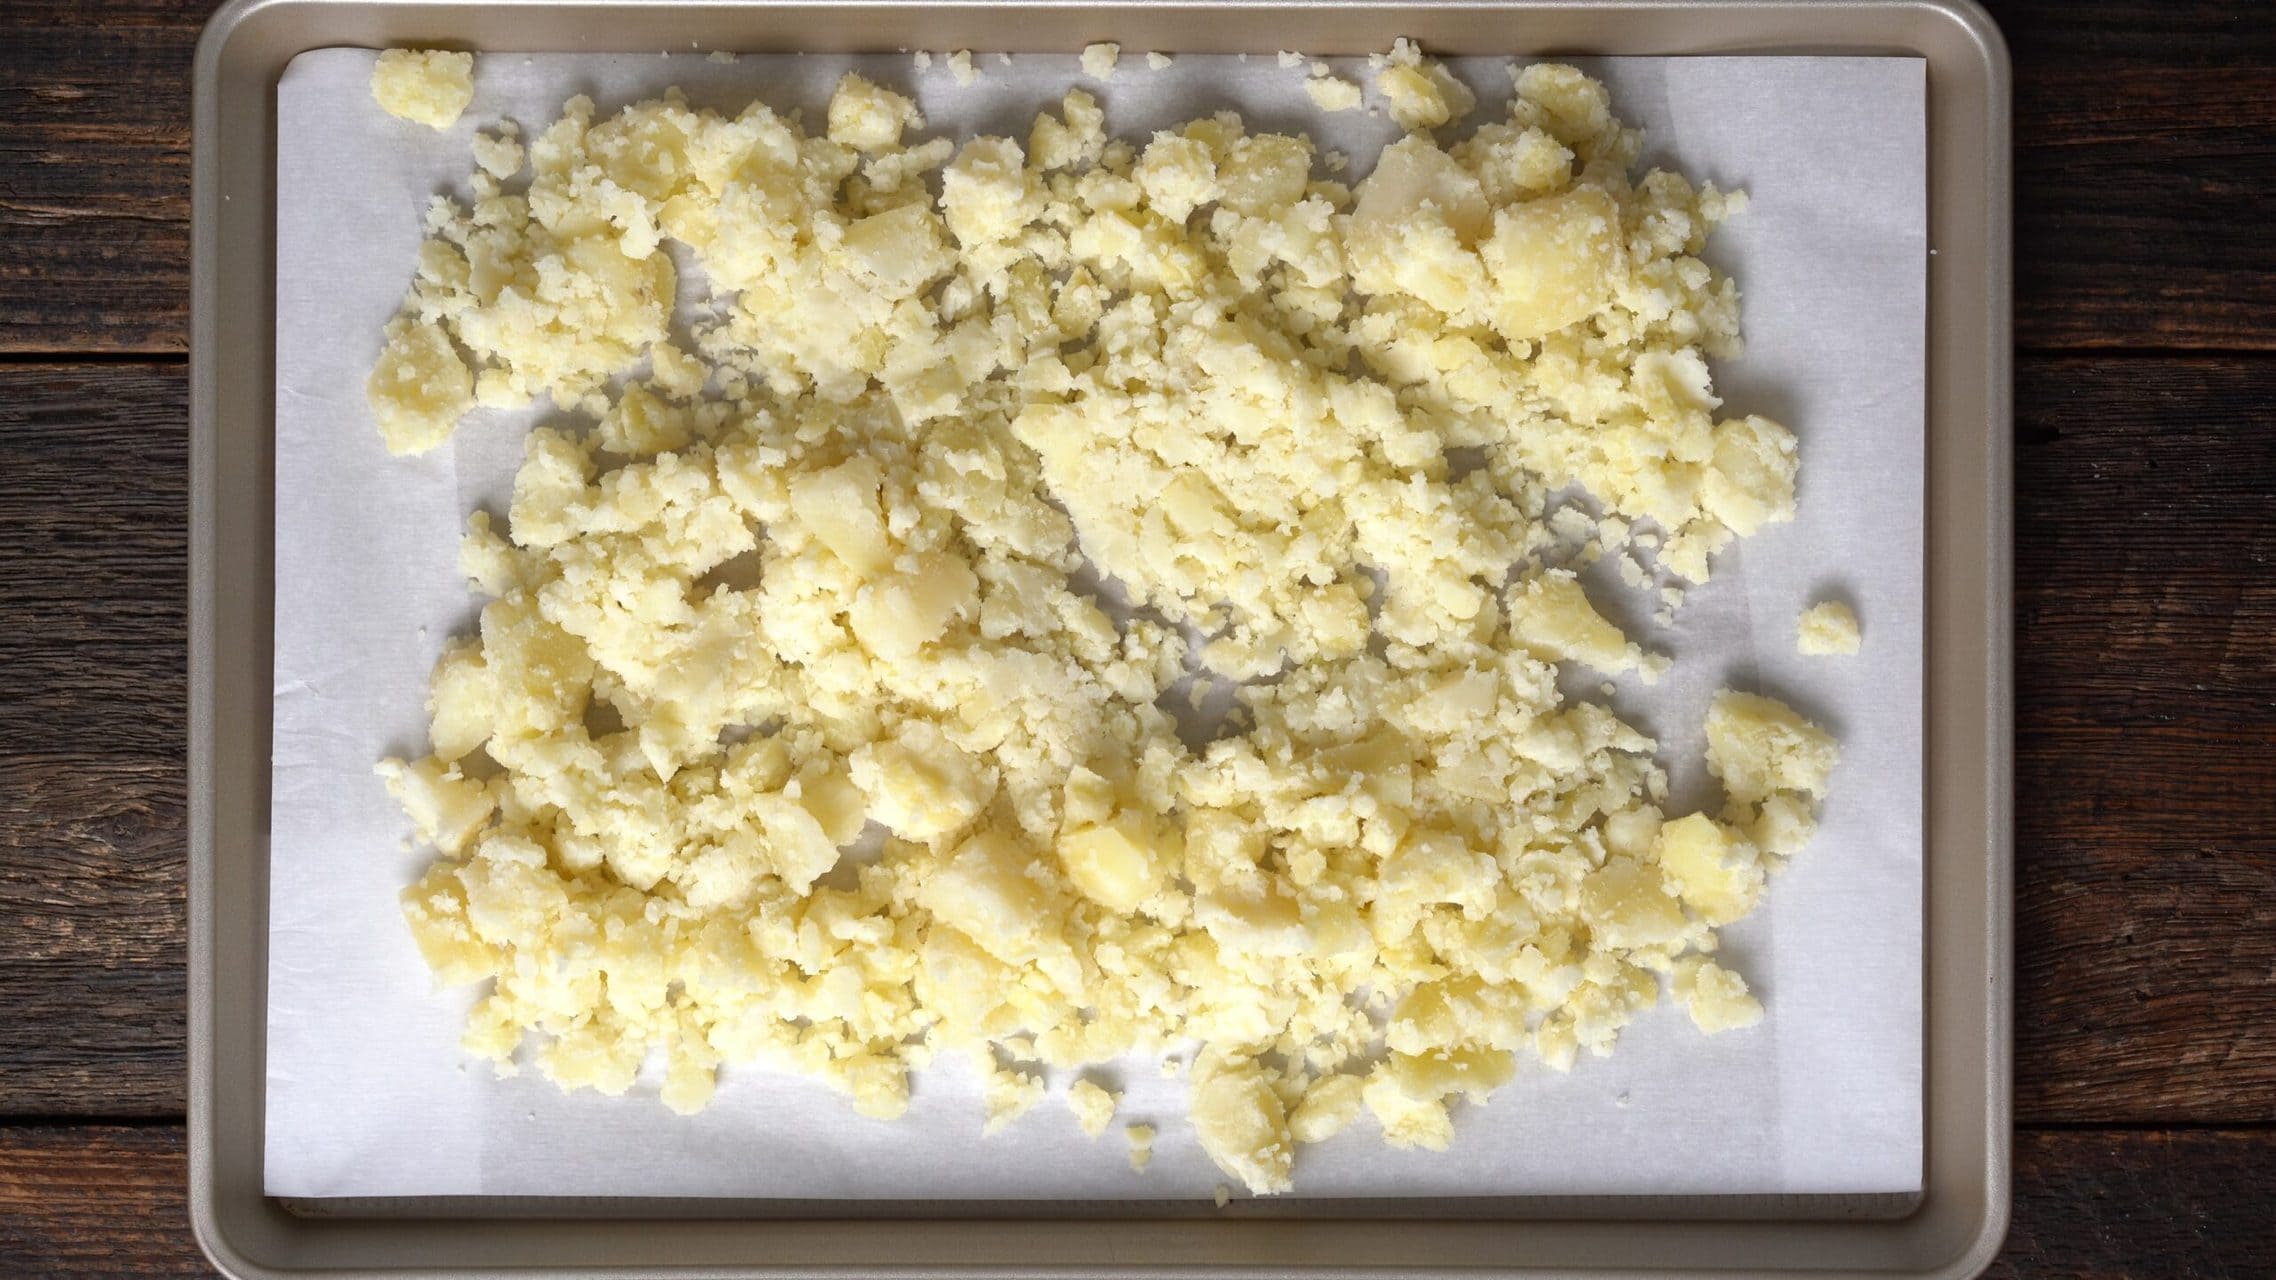 mashed potatoes on a baking sheet